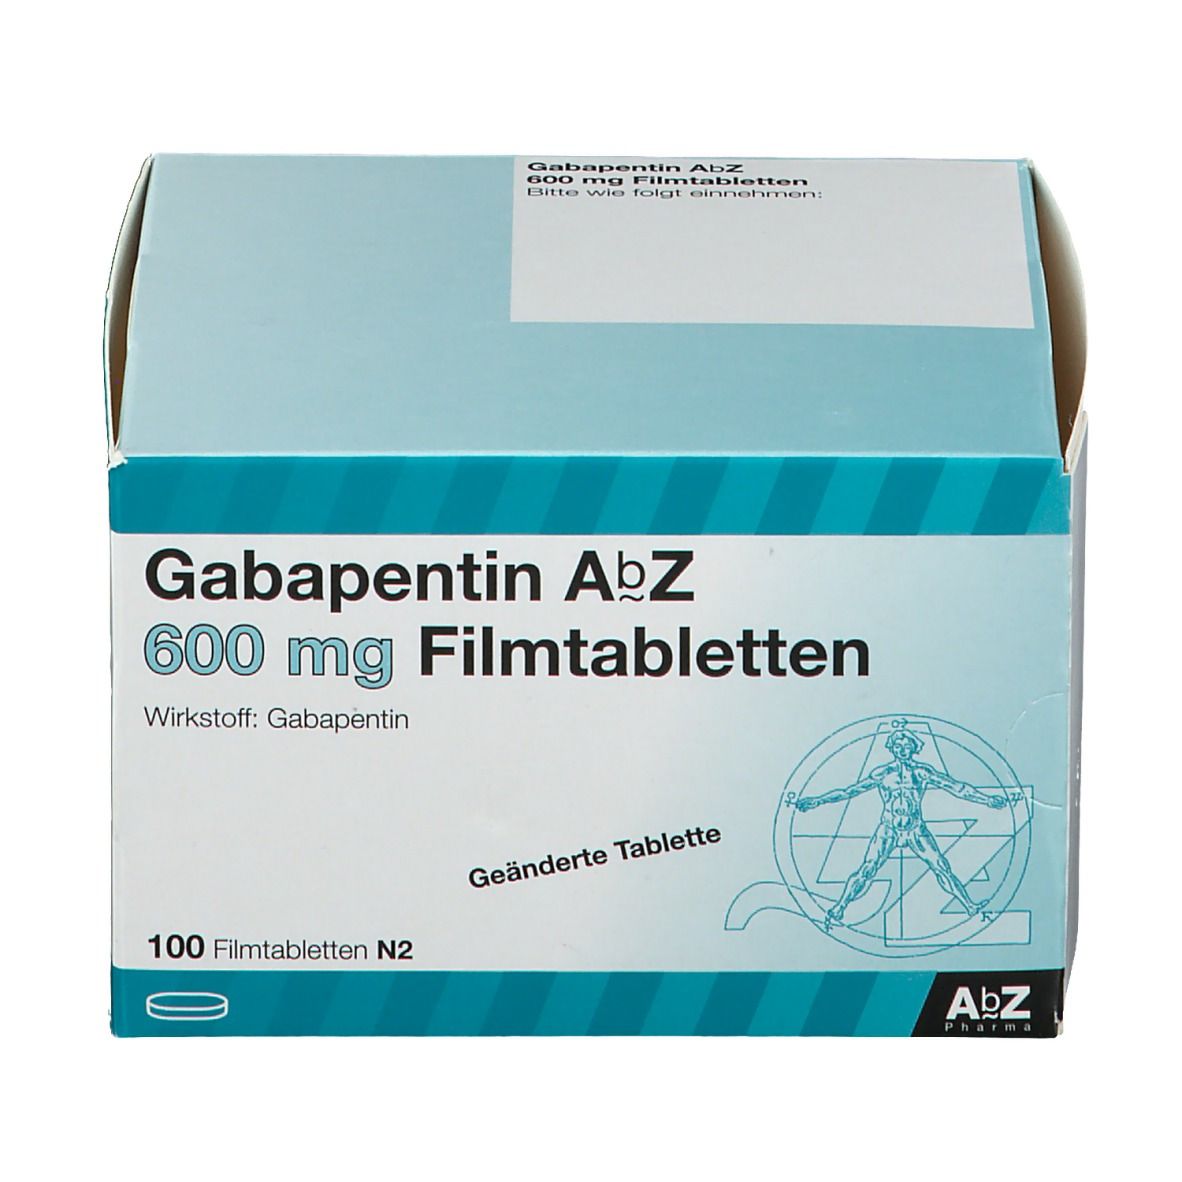 Gabapentin AbZ 600 mg